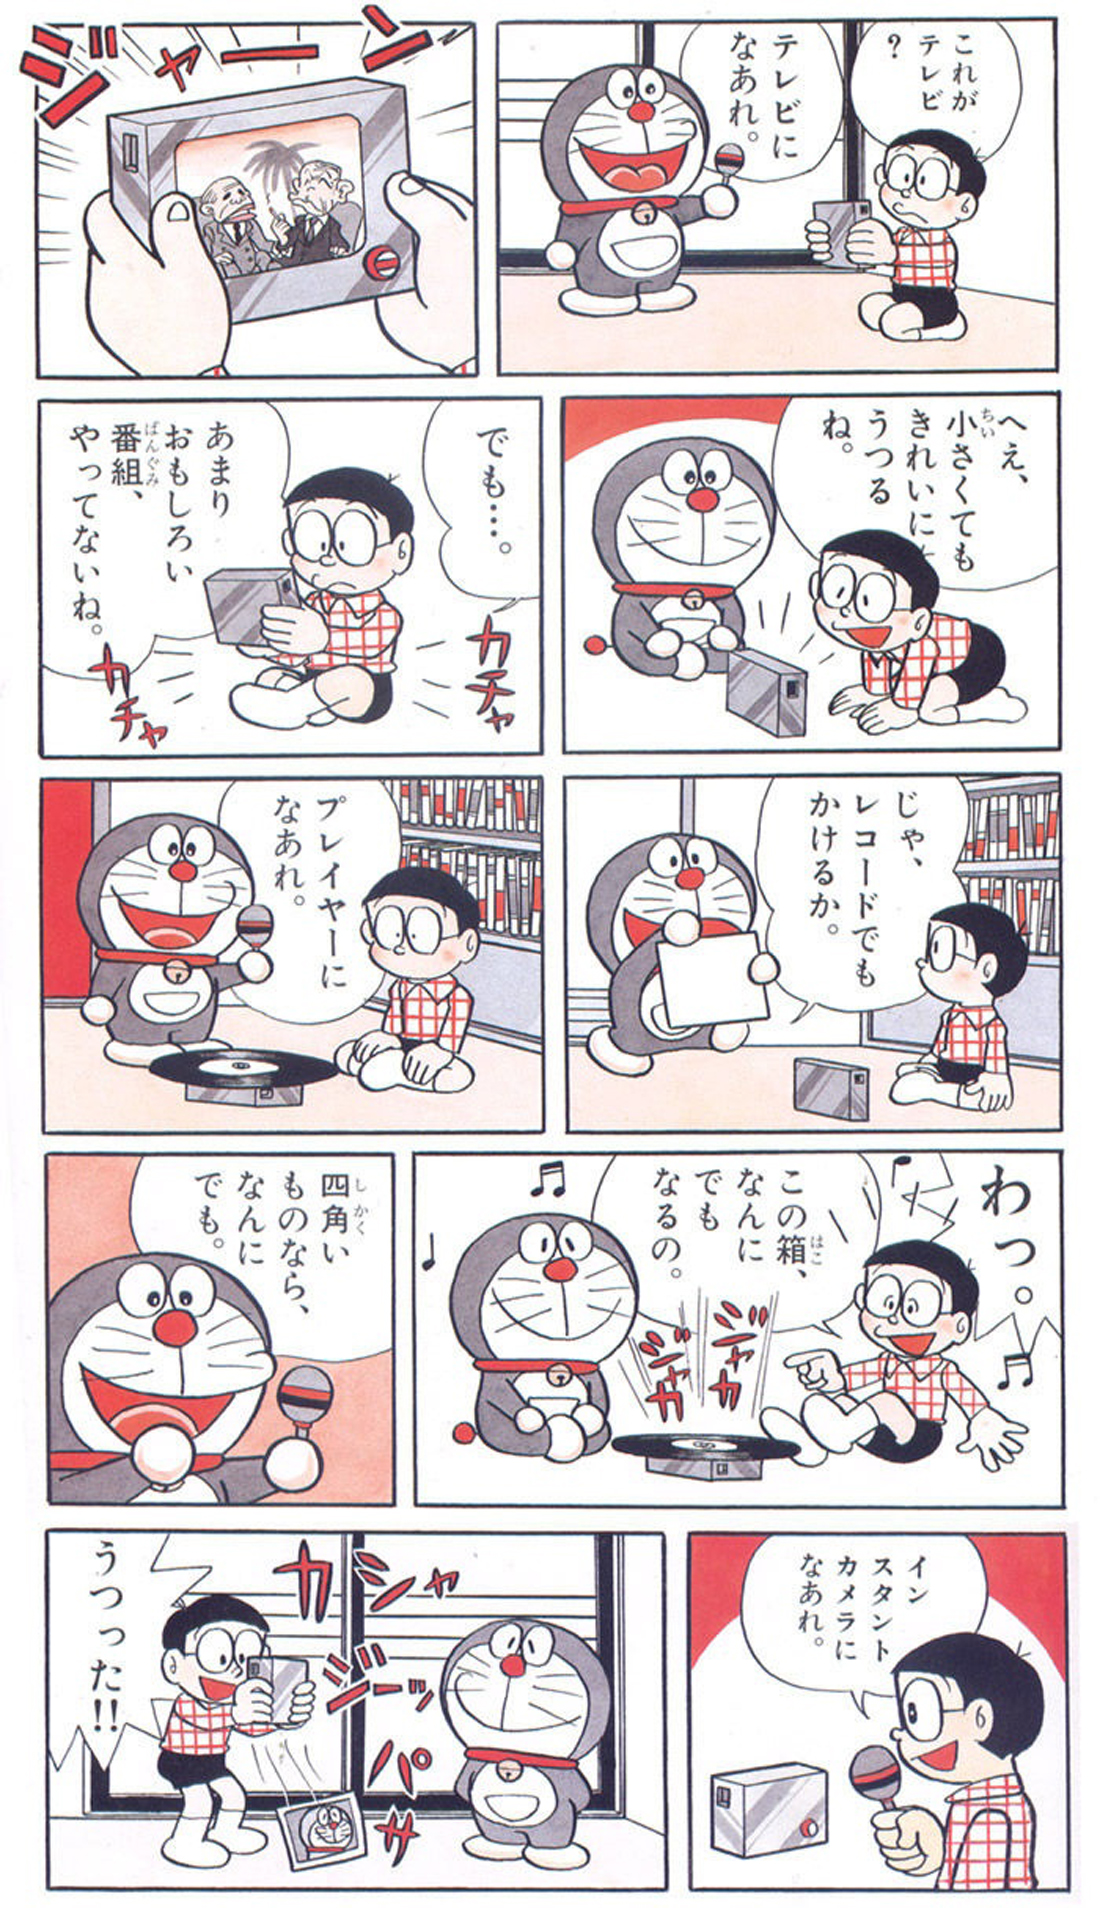 MG. Doraemon 1